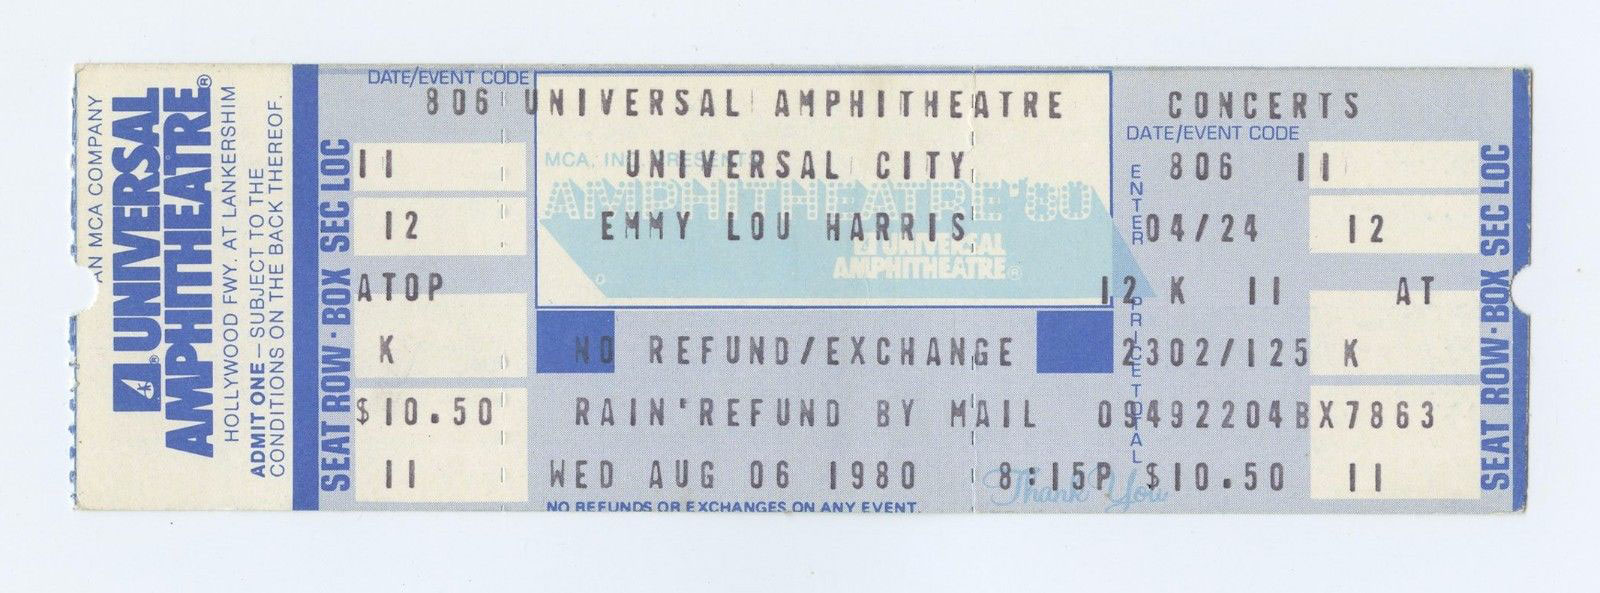 Emmylou Harris Vintage Ticket 1980 Aug 6 Universal City Amphitheatre LA 